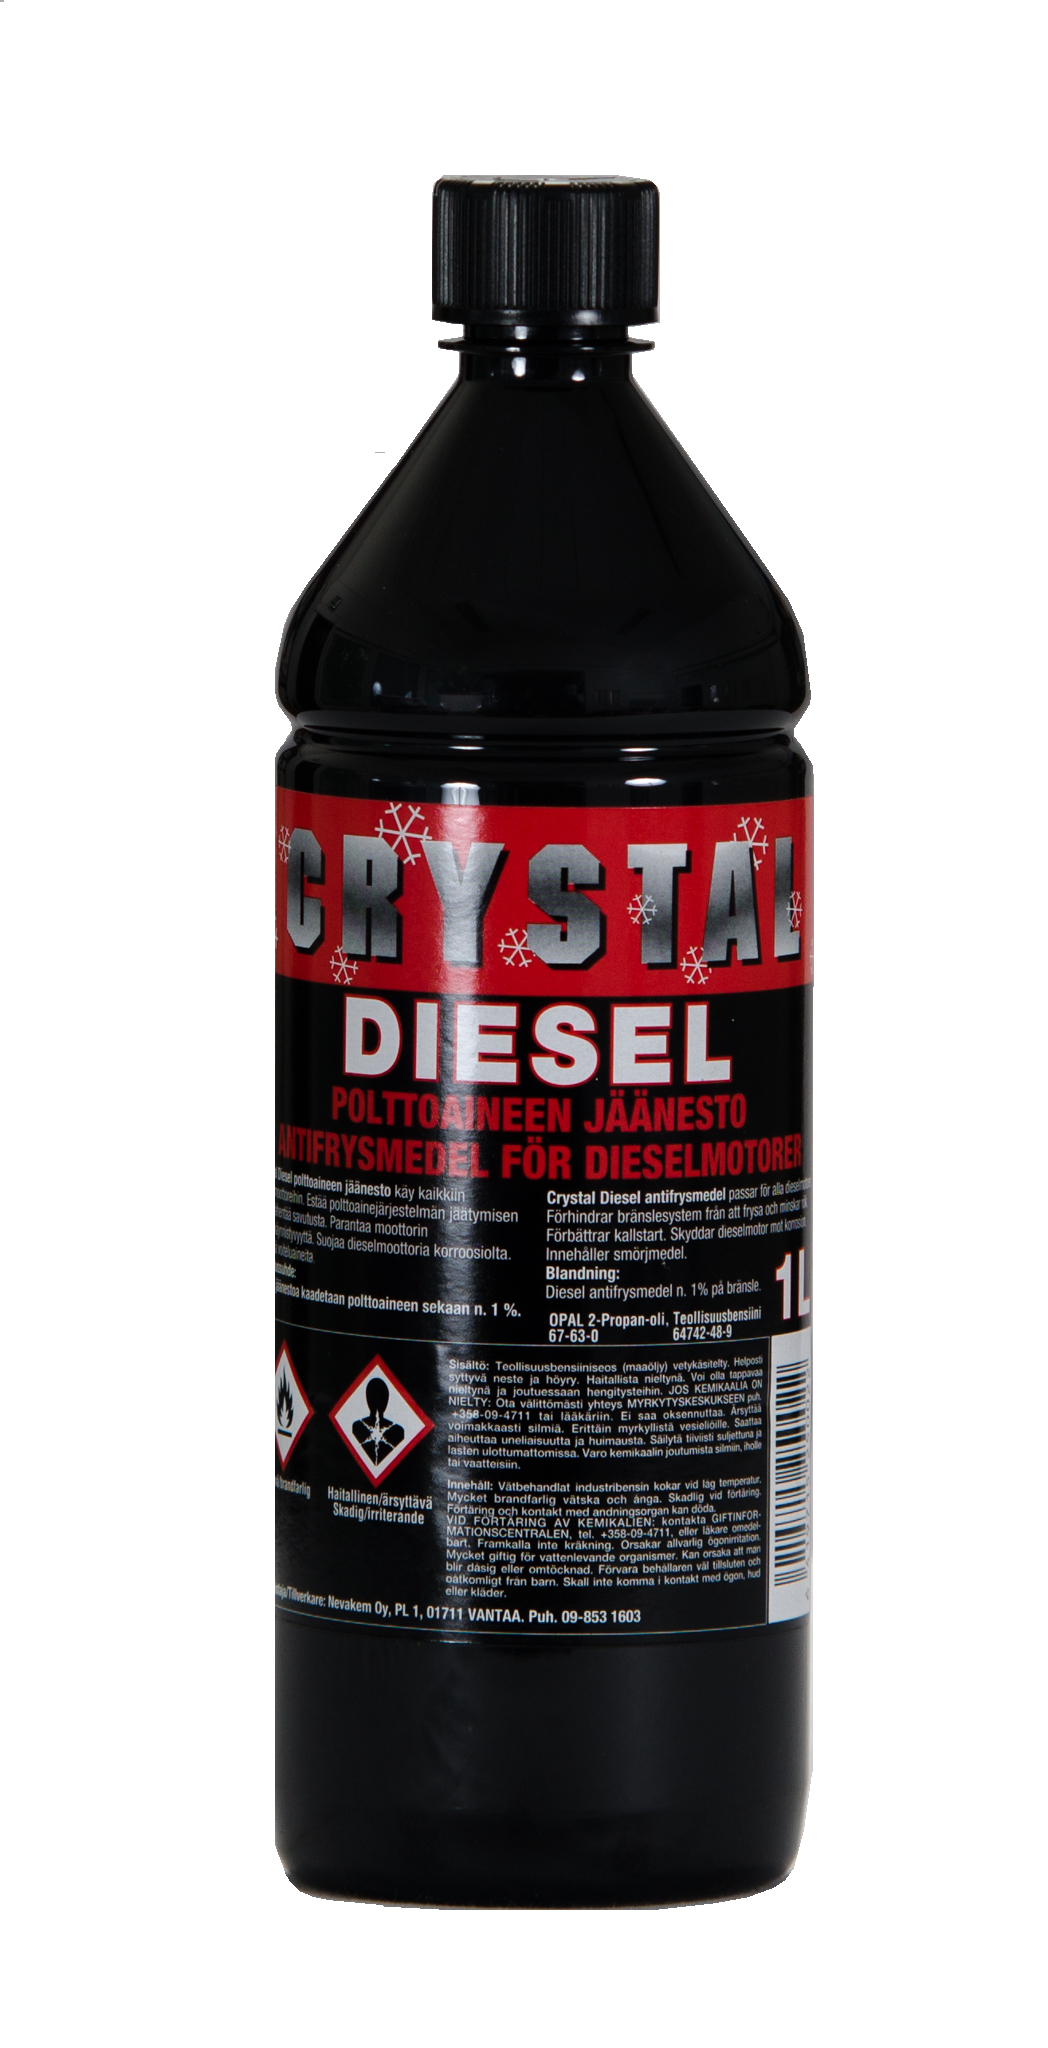 CRYSTAL Diesel Polttoaineen jäänesto 1L